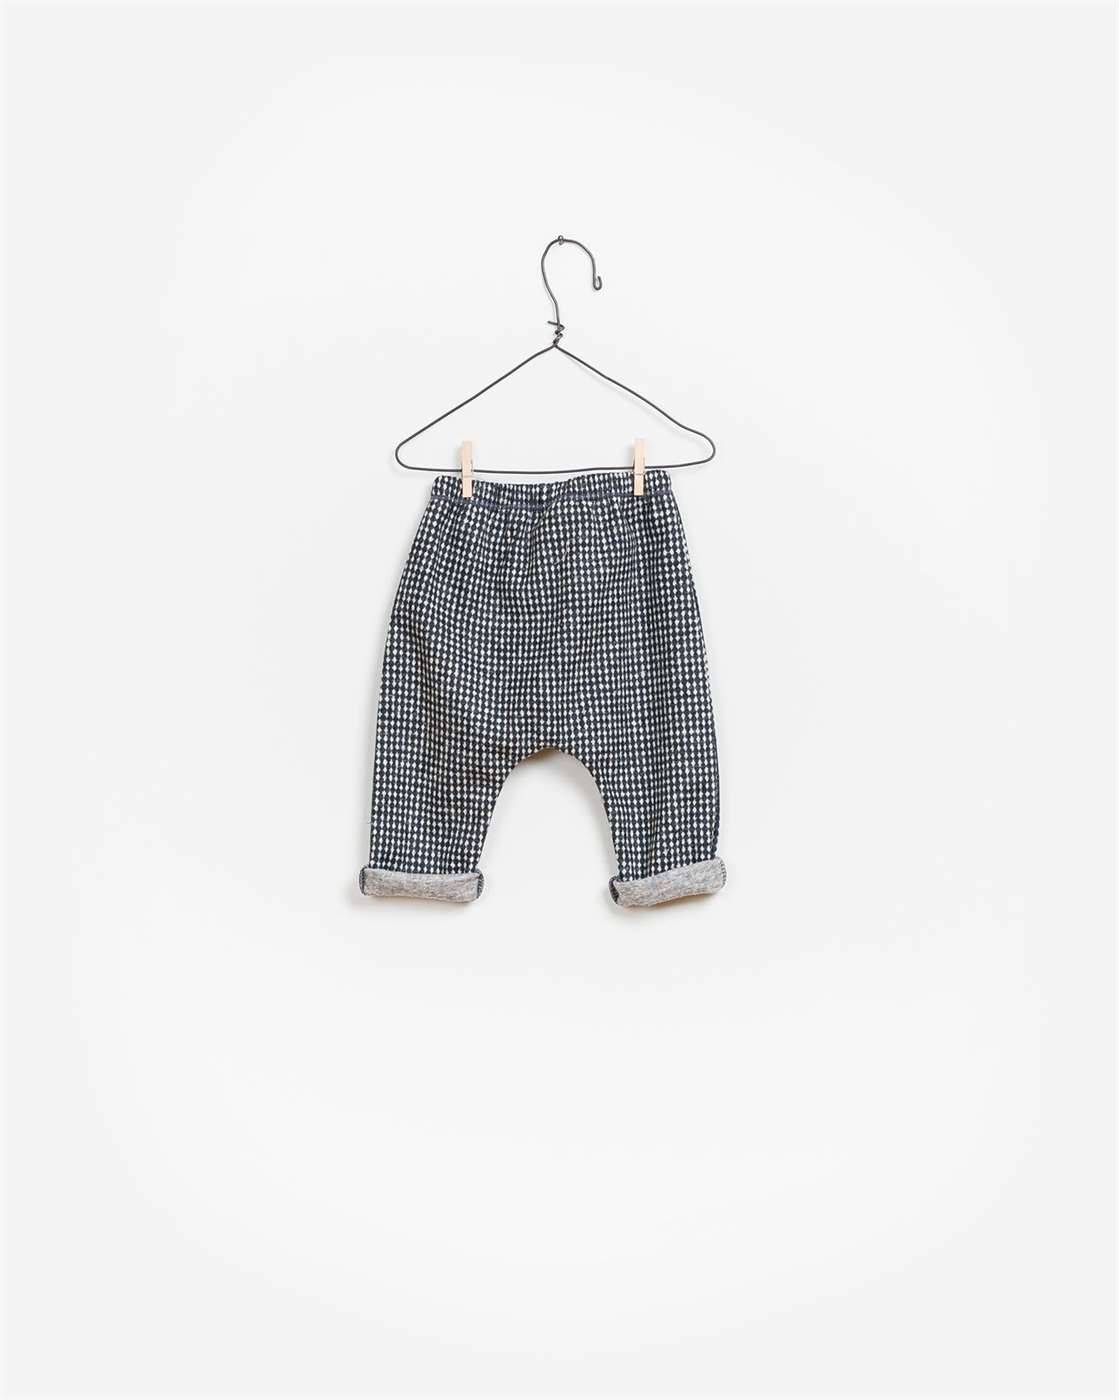 BeeBoo|BeeBoo PlayUp vêtements bébé baby clothes pantalon pants Interlock gris grey 1